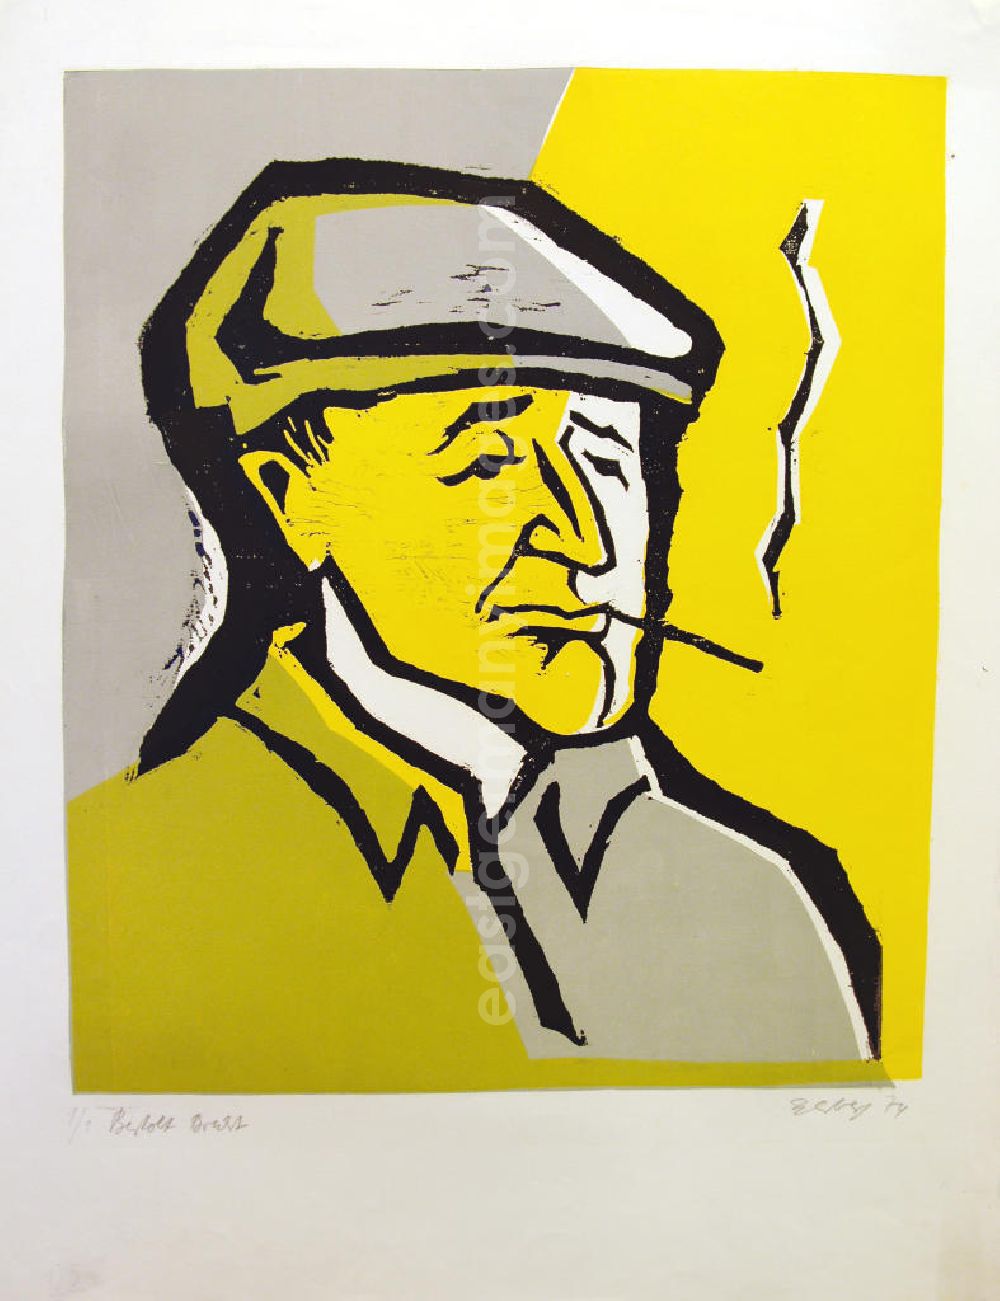 GDR picture archive: Berlin - Grafik von Herbert Sandberg über Bertolt Brecht (*10.02.1898 †14.08.1956) b.b. (Brecht Porträt links, raucht) aus dem Jahr 1974, 36,8x42,